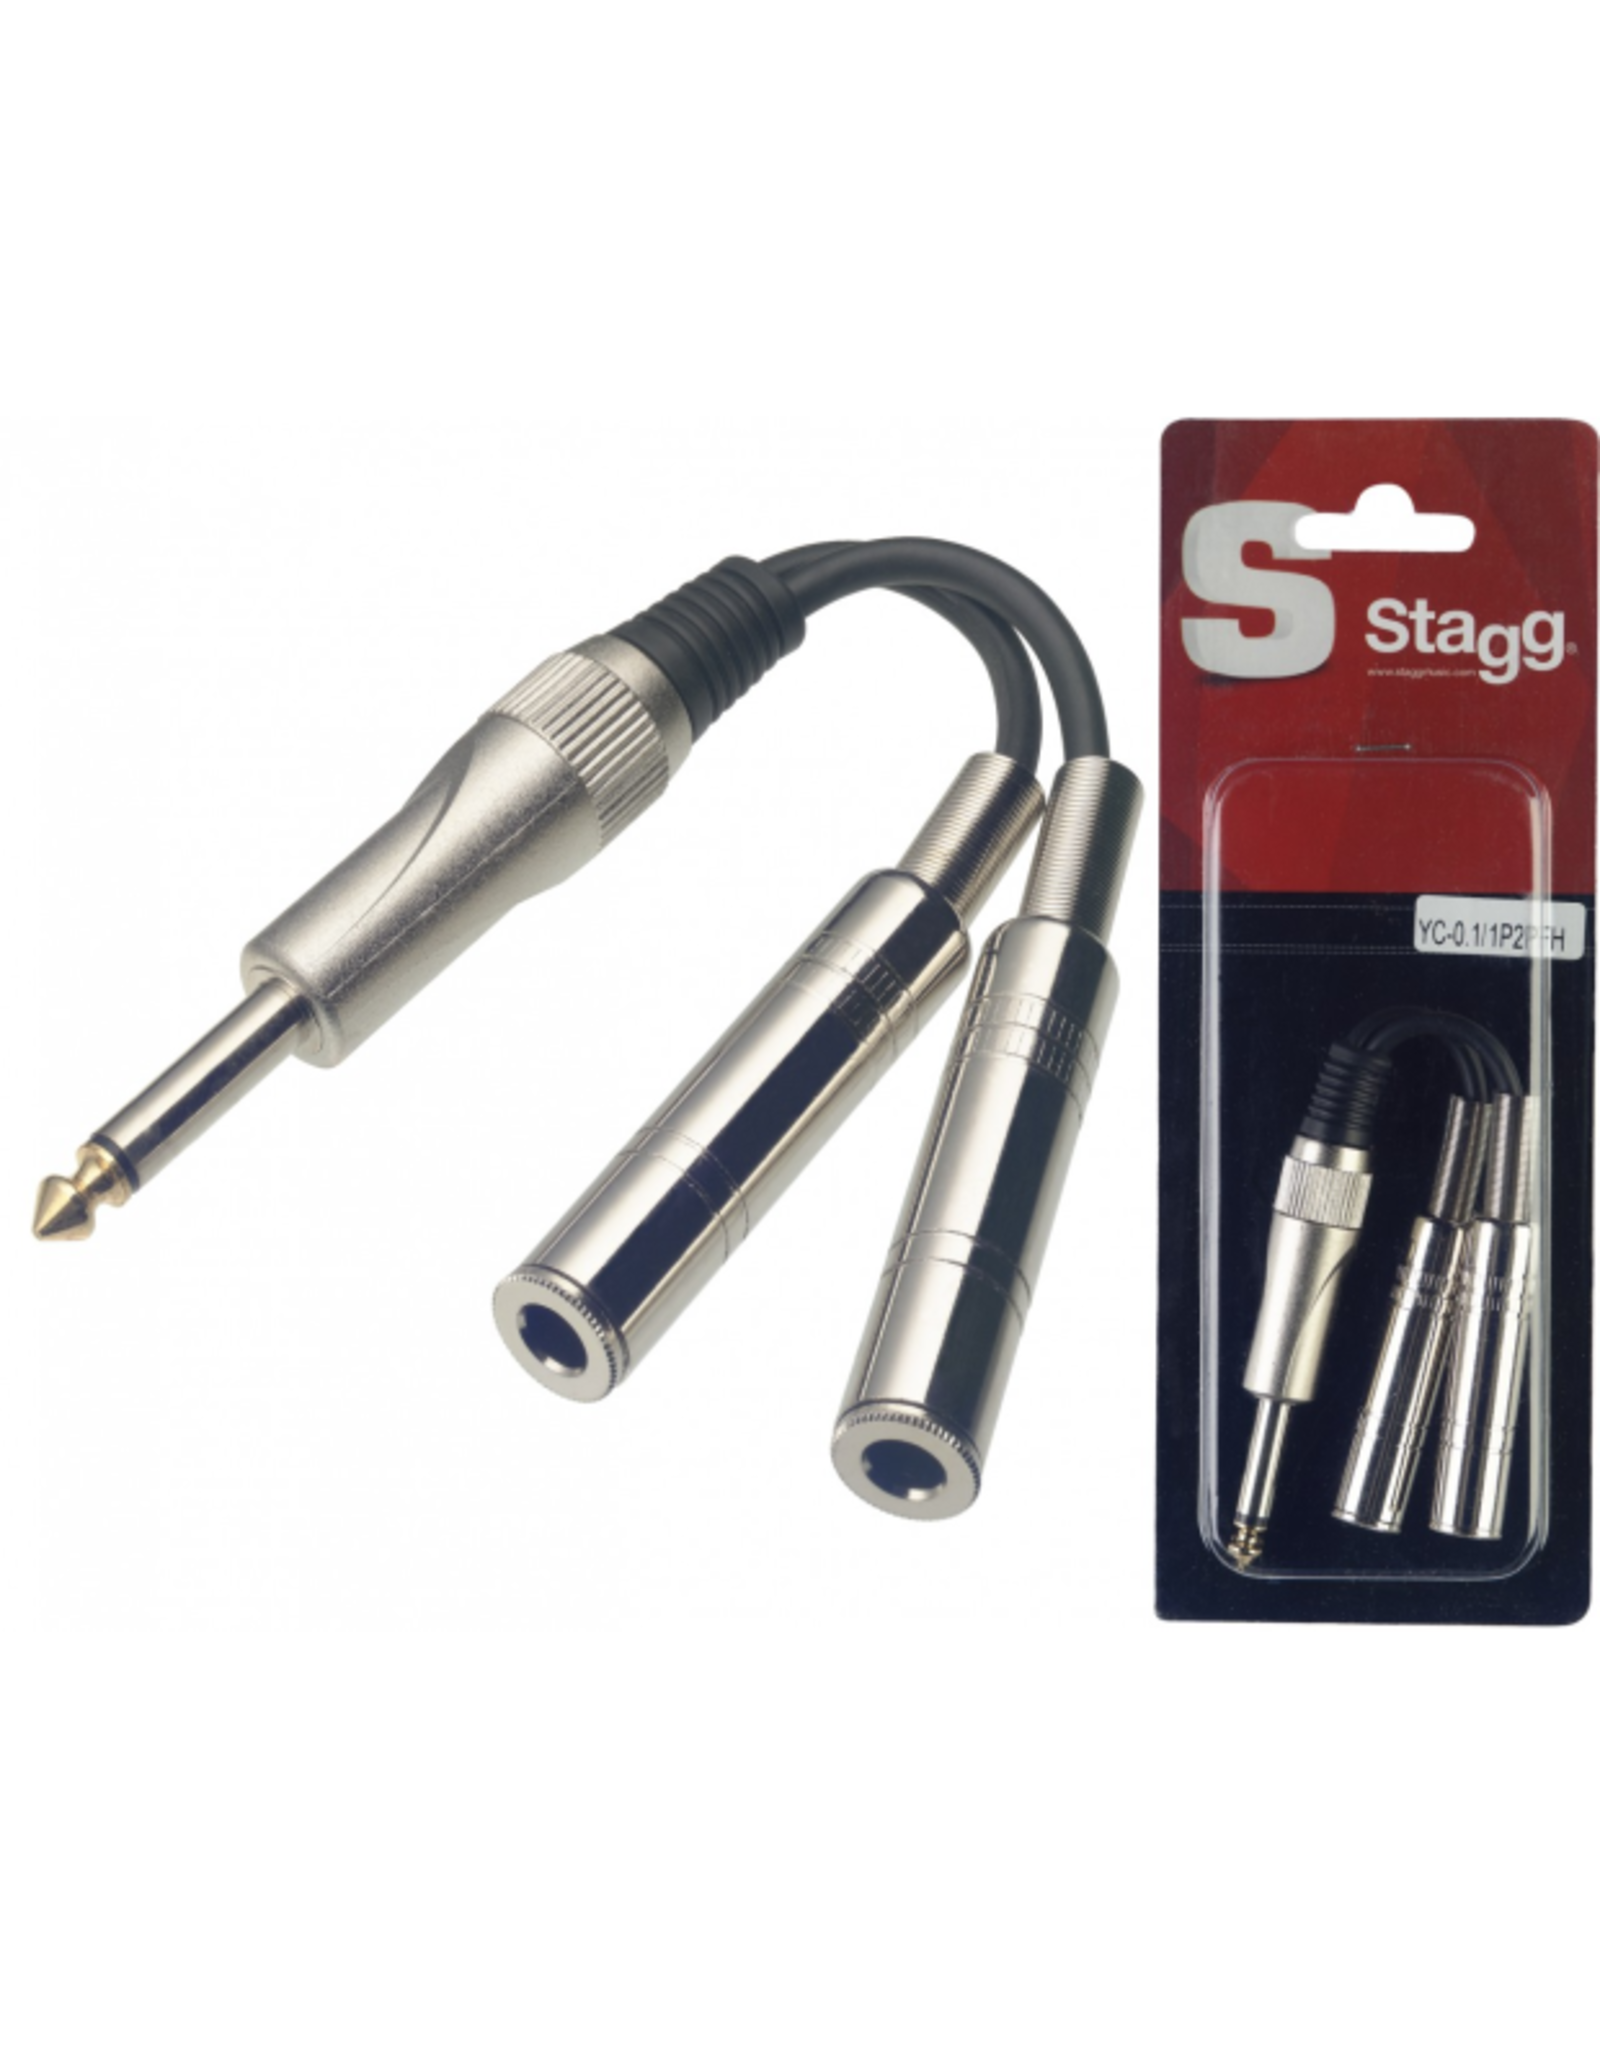 Stagg Stagg 1 x Male Mono Phone Plug/2x Female Mono Phone Plug adaptor